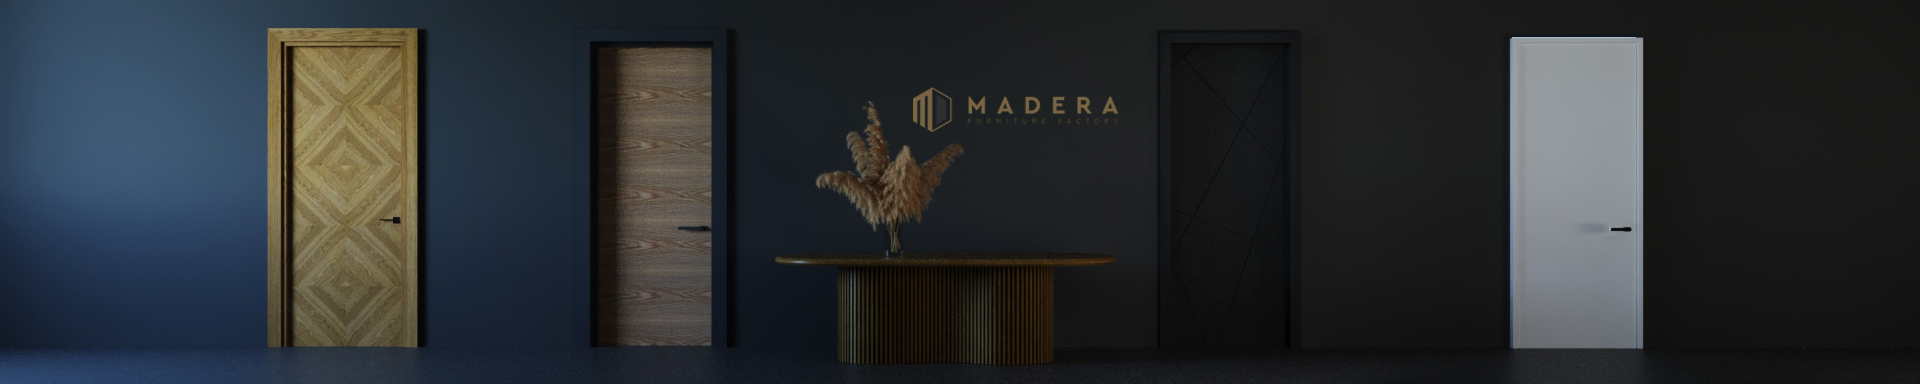 Madera Furniture Factory